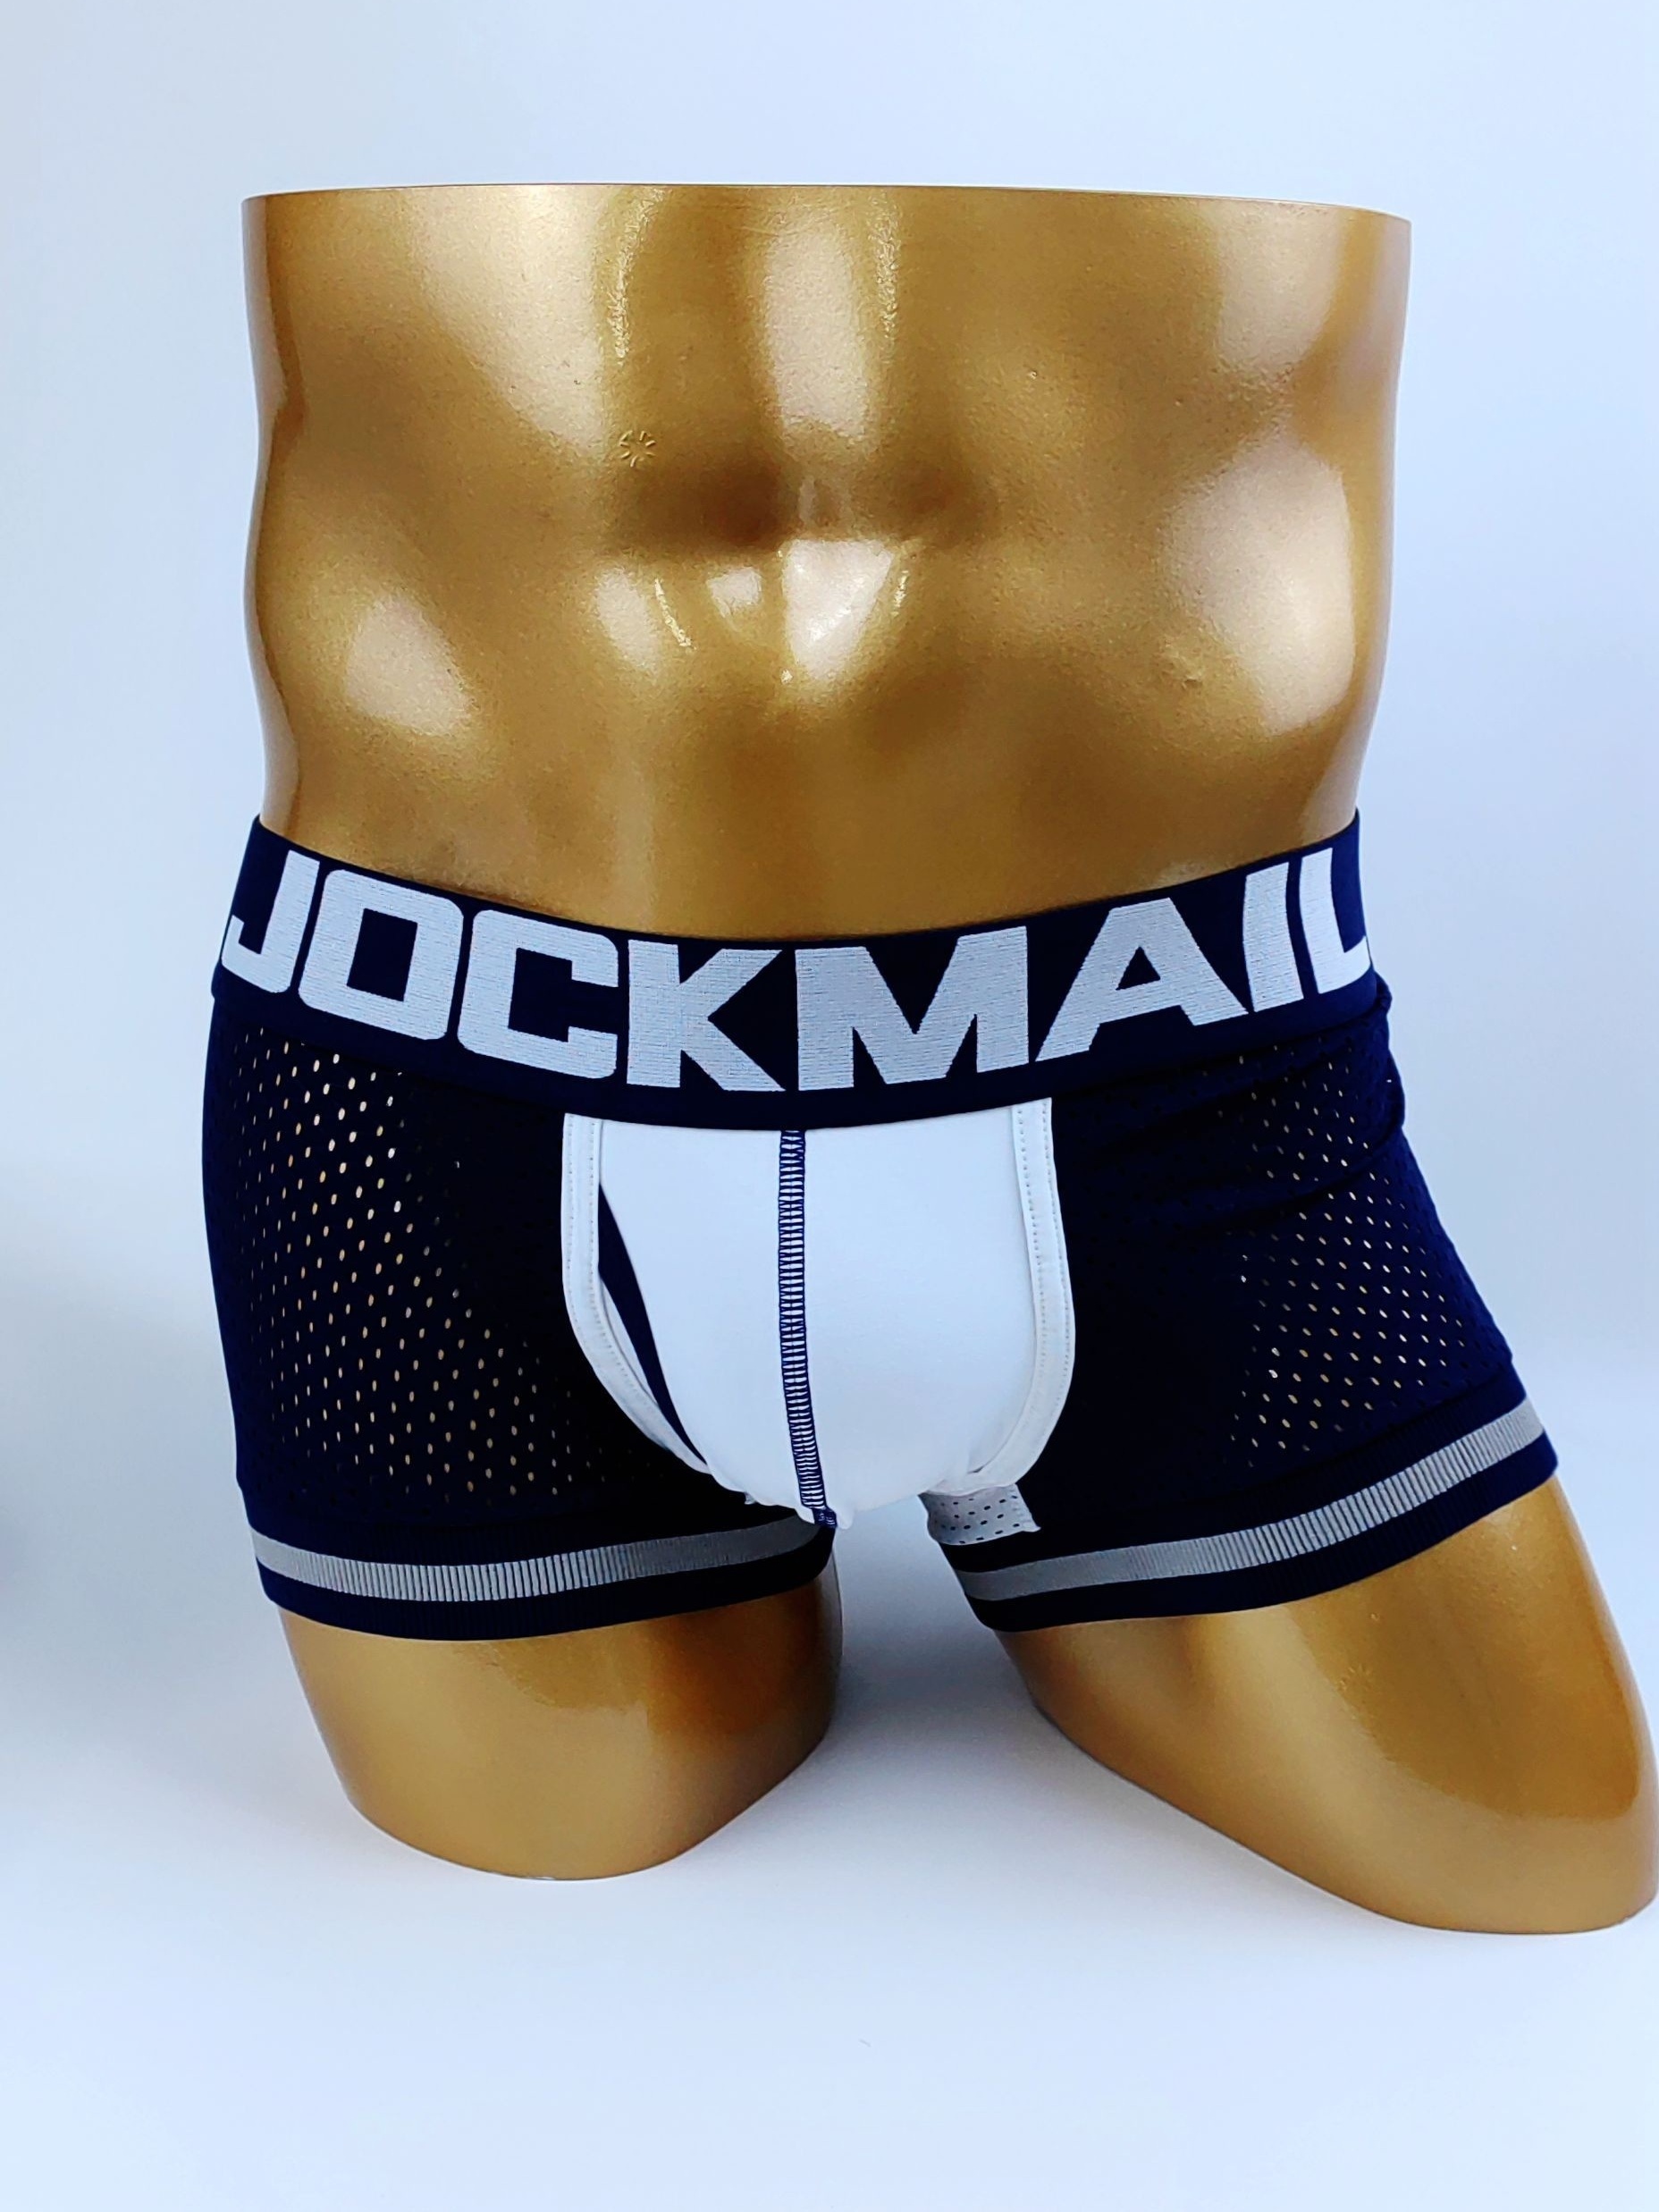 Blue Men's Sexy Boxer Shorts Thong Underwear Pouch Trunks